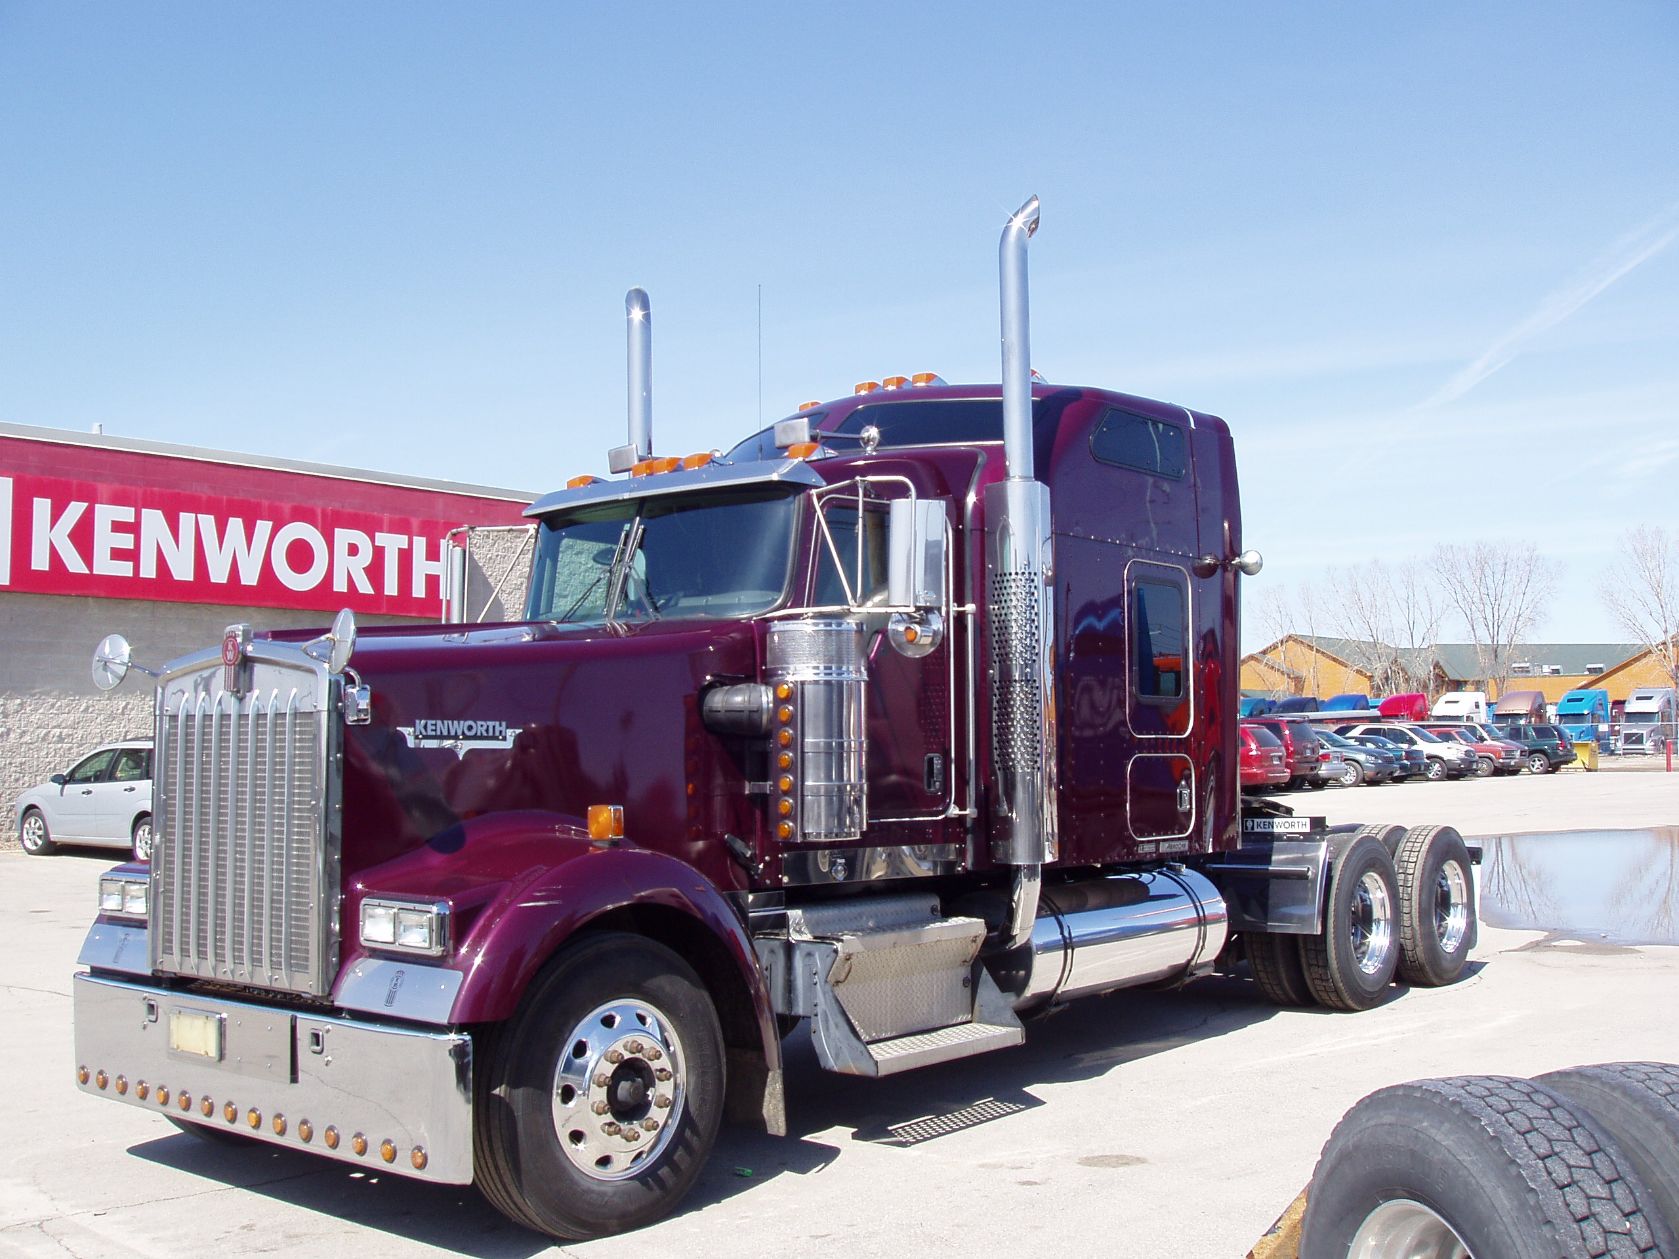 Kenworth renueva sus camiones